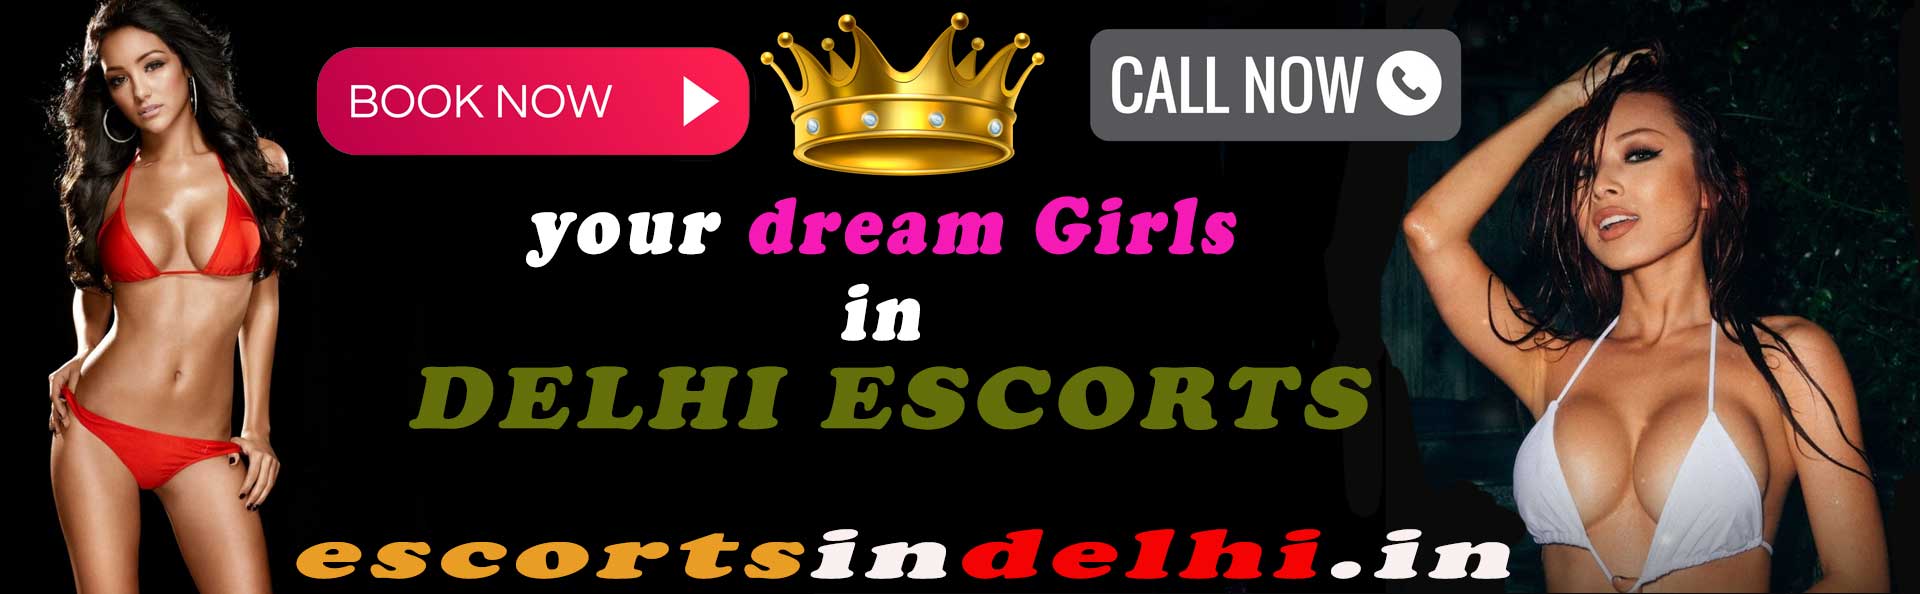 Aerocity Call Girls